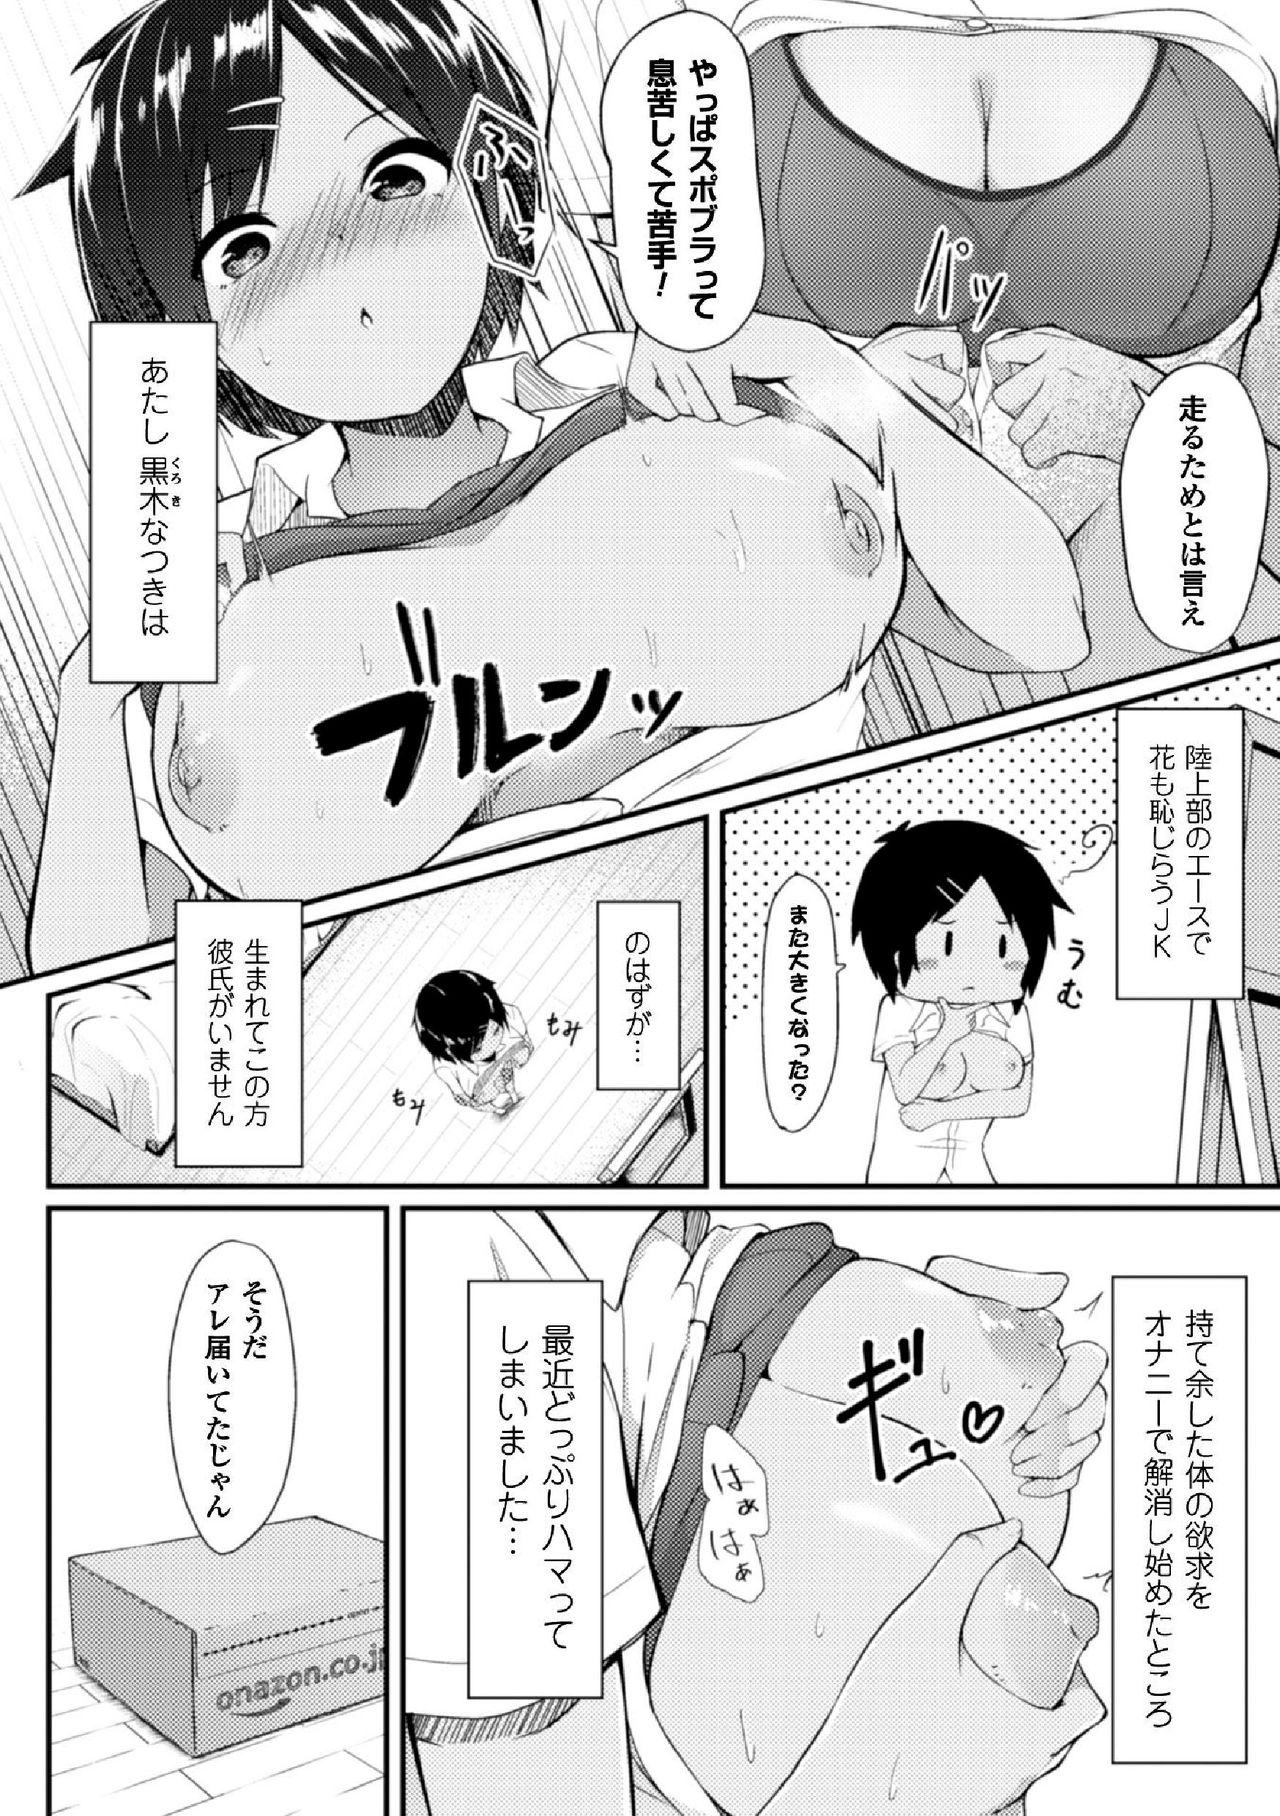 2D Comic Magazine TS Jibun Heroine mou Hitori no Ore ga Erosugite Gaman Dekinee! Vol. 2 43